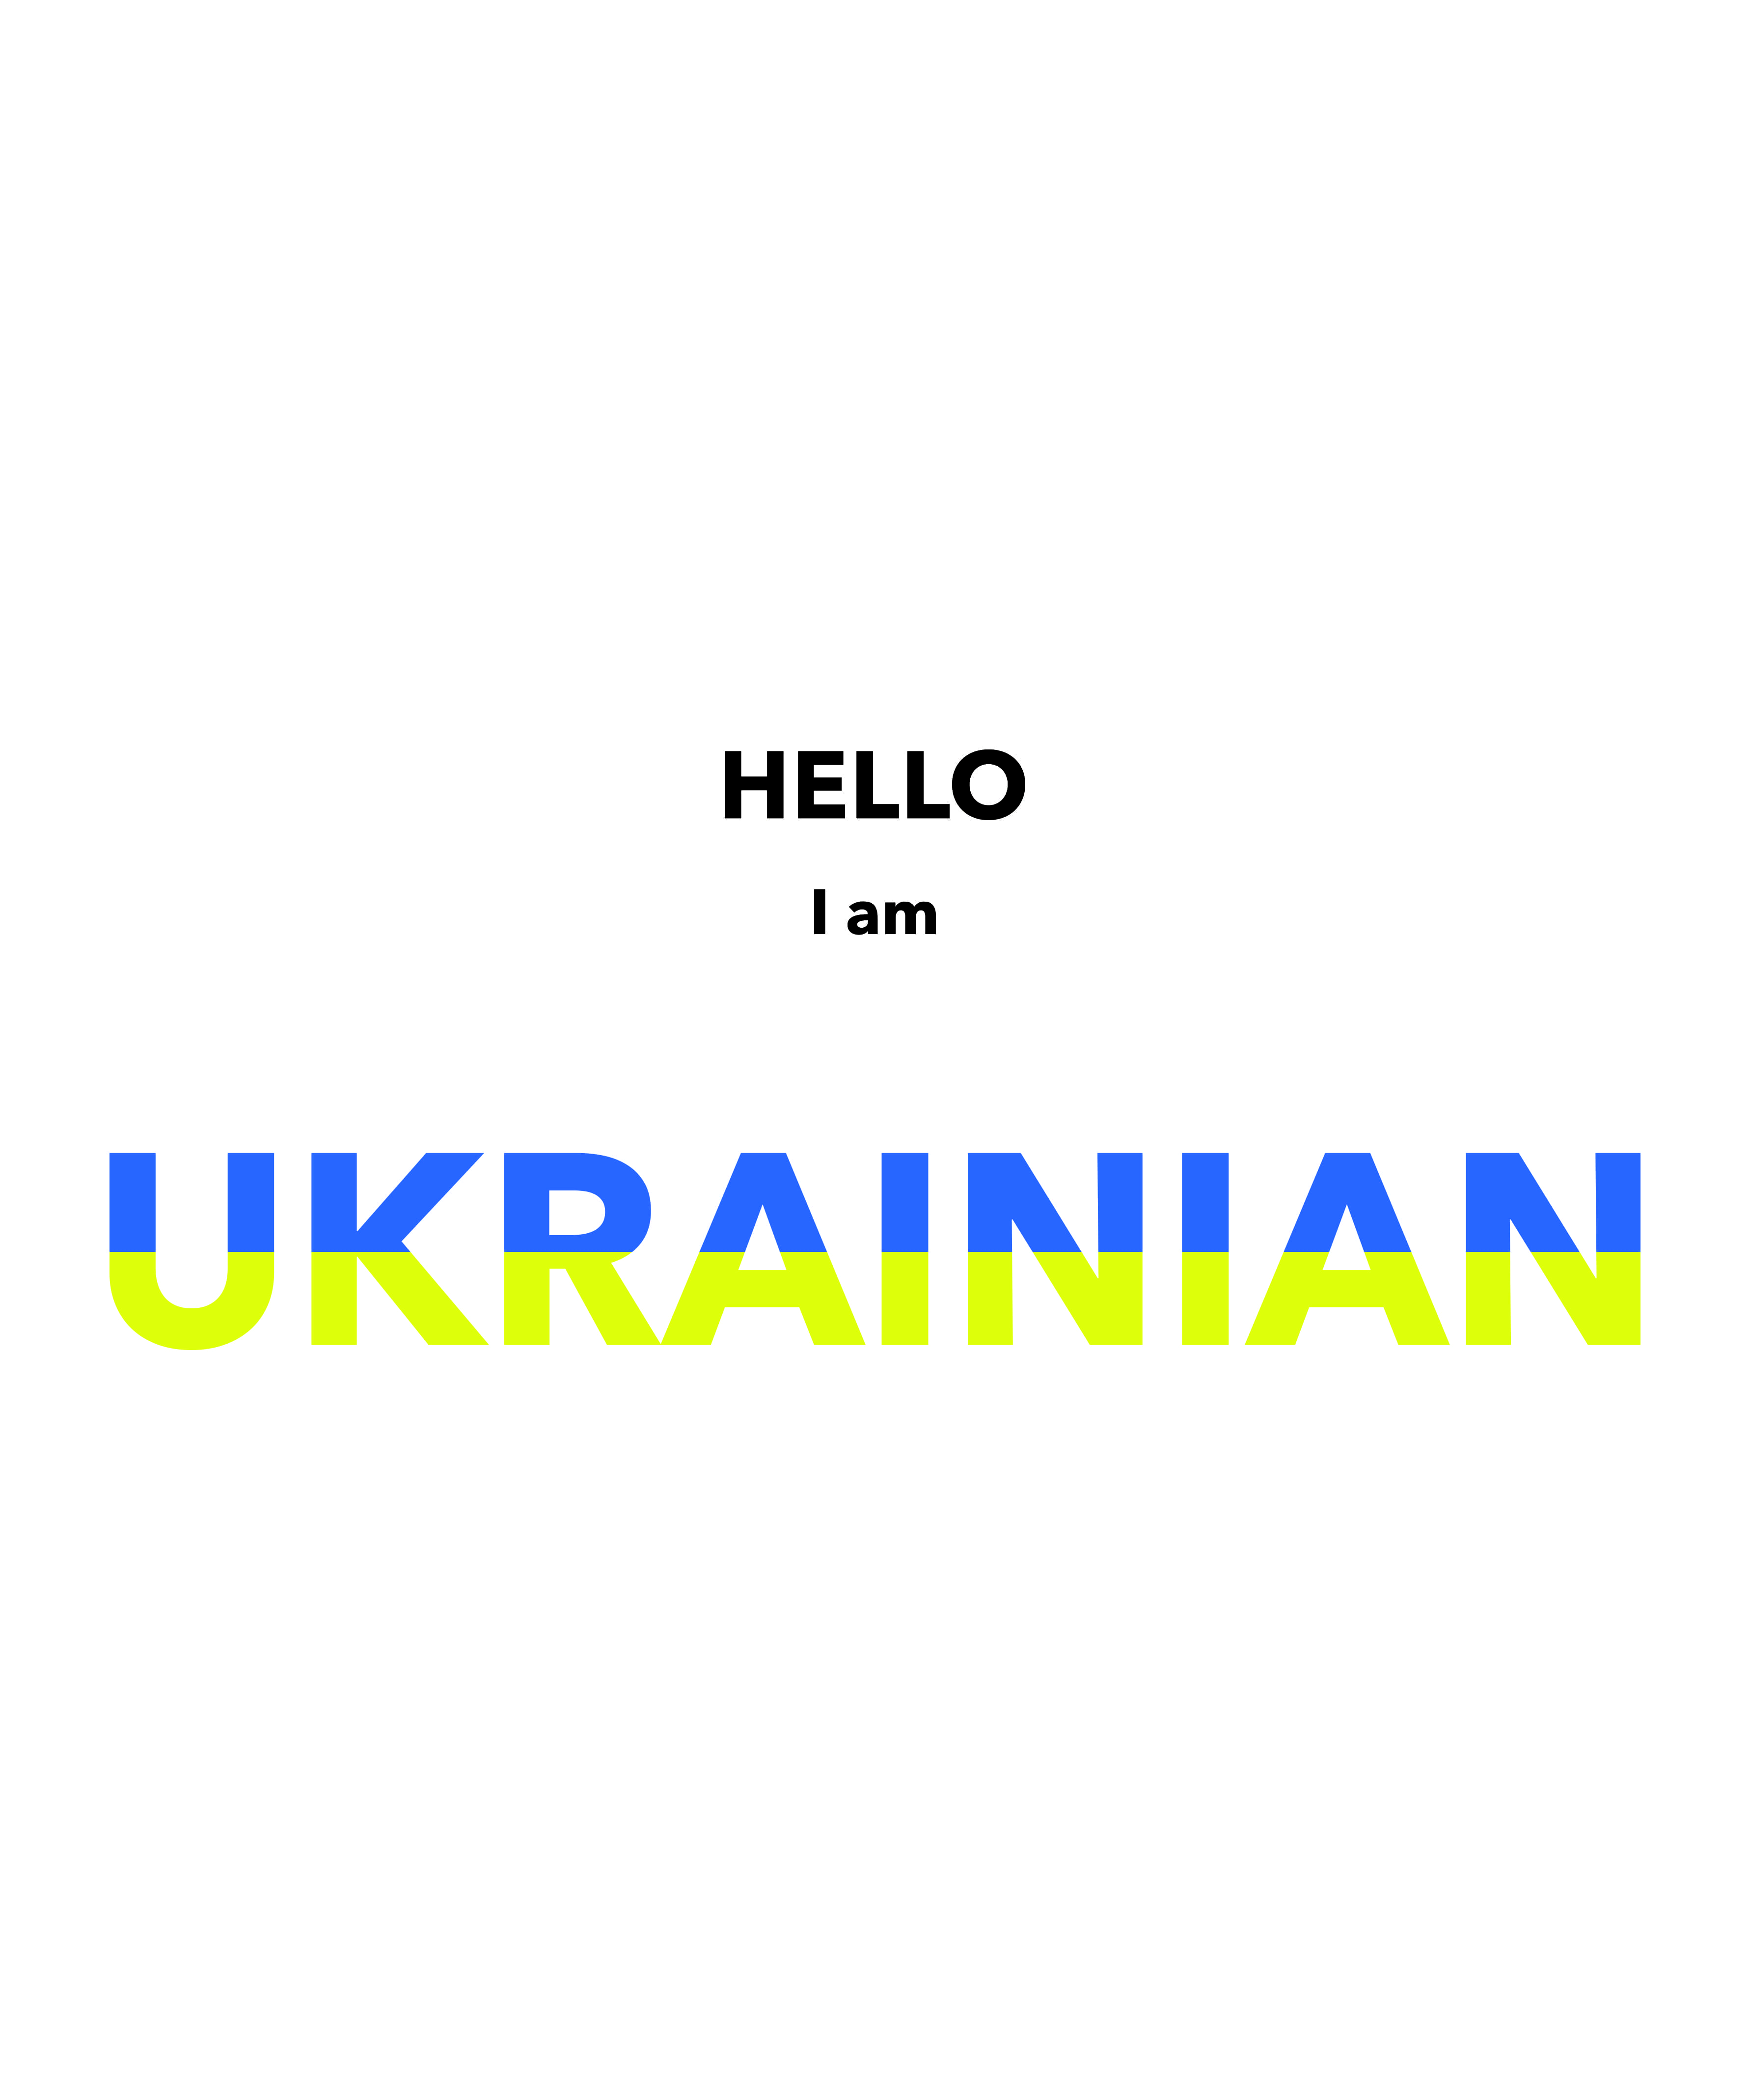 ukrainian t-shirt in white